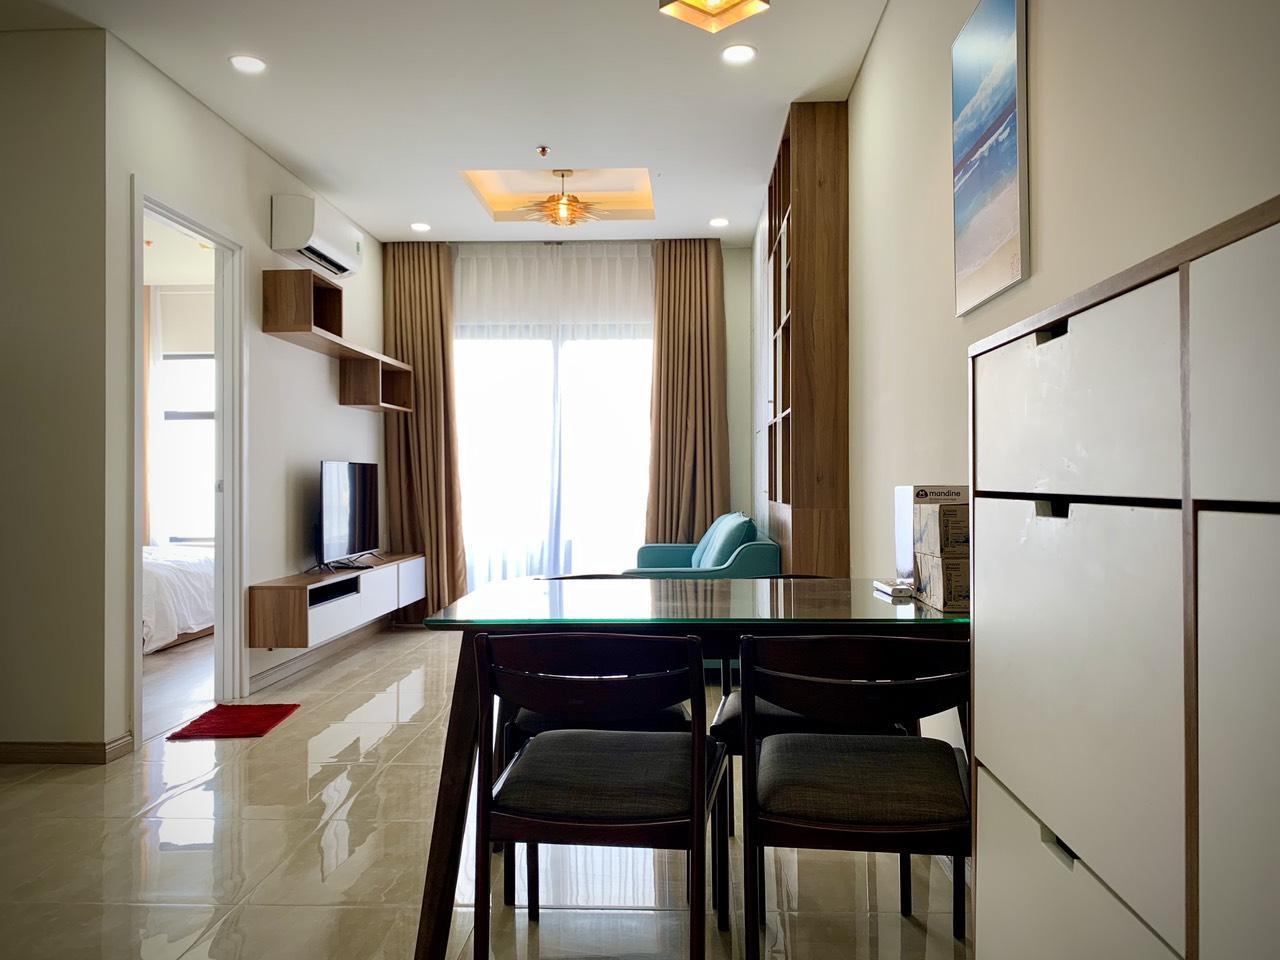 Monarchy Complex,2 bedroom apartment for rent, high floor,Han river view.